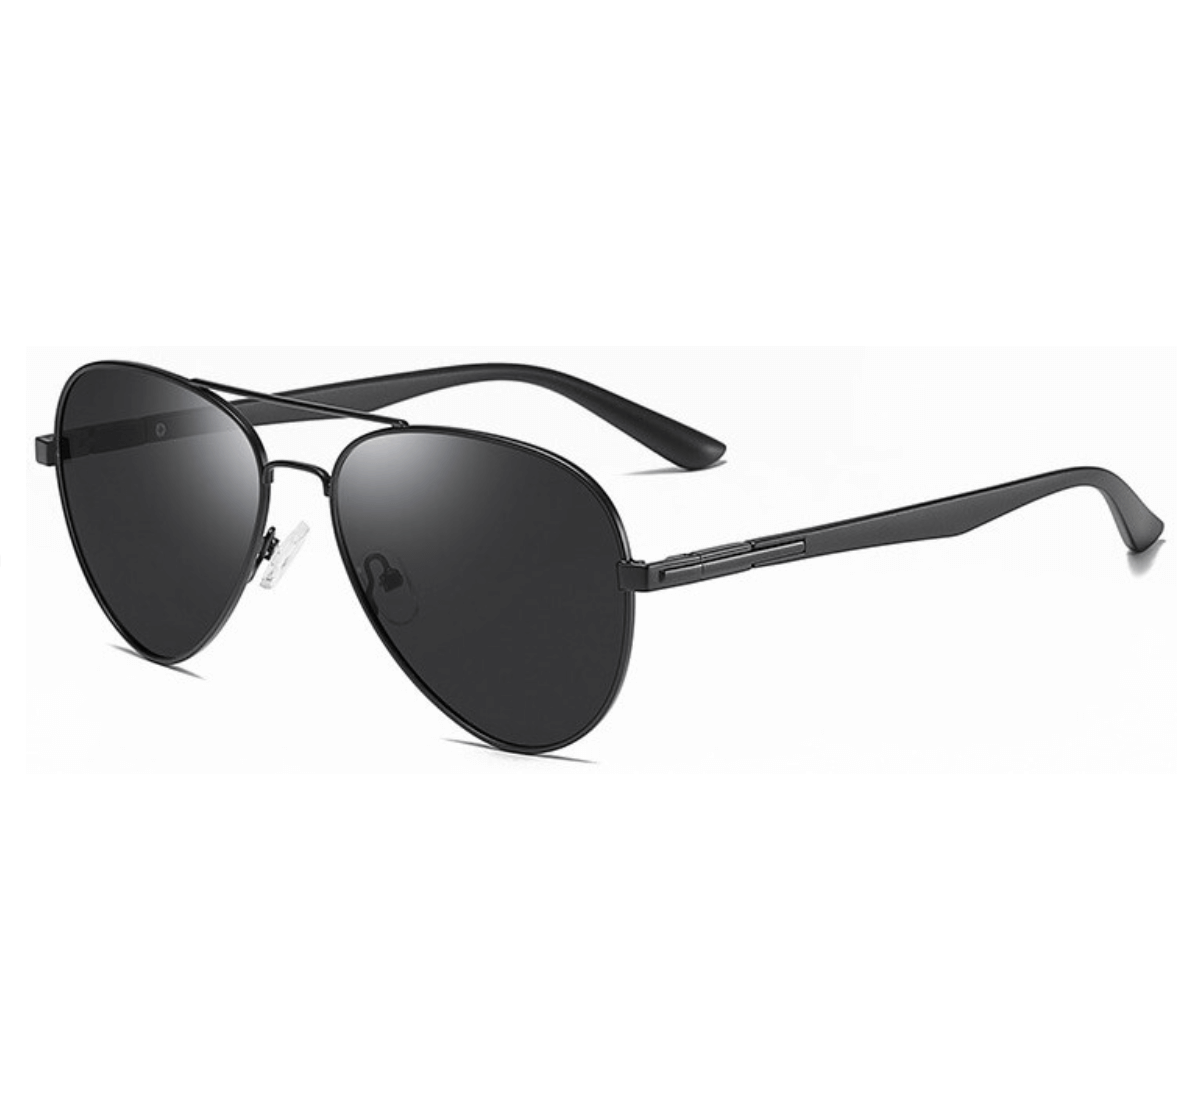 mens sunglasses wholesale, Wholesale aviator sunglasses, bulk aviator sunglasses, cheap aviator sunglasses bulk, custom aviator Sunglasses, China Sunglasses Manufacturer